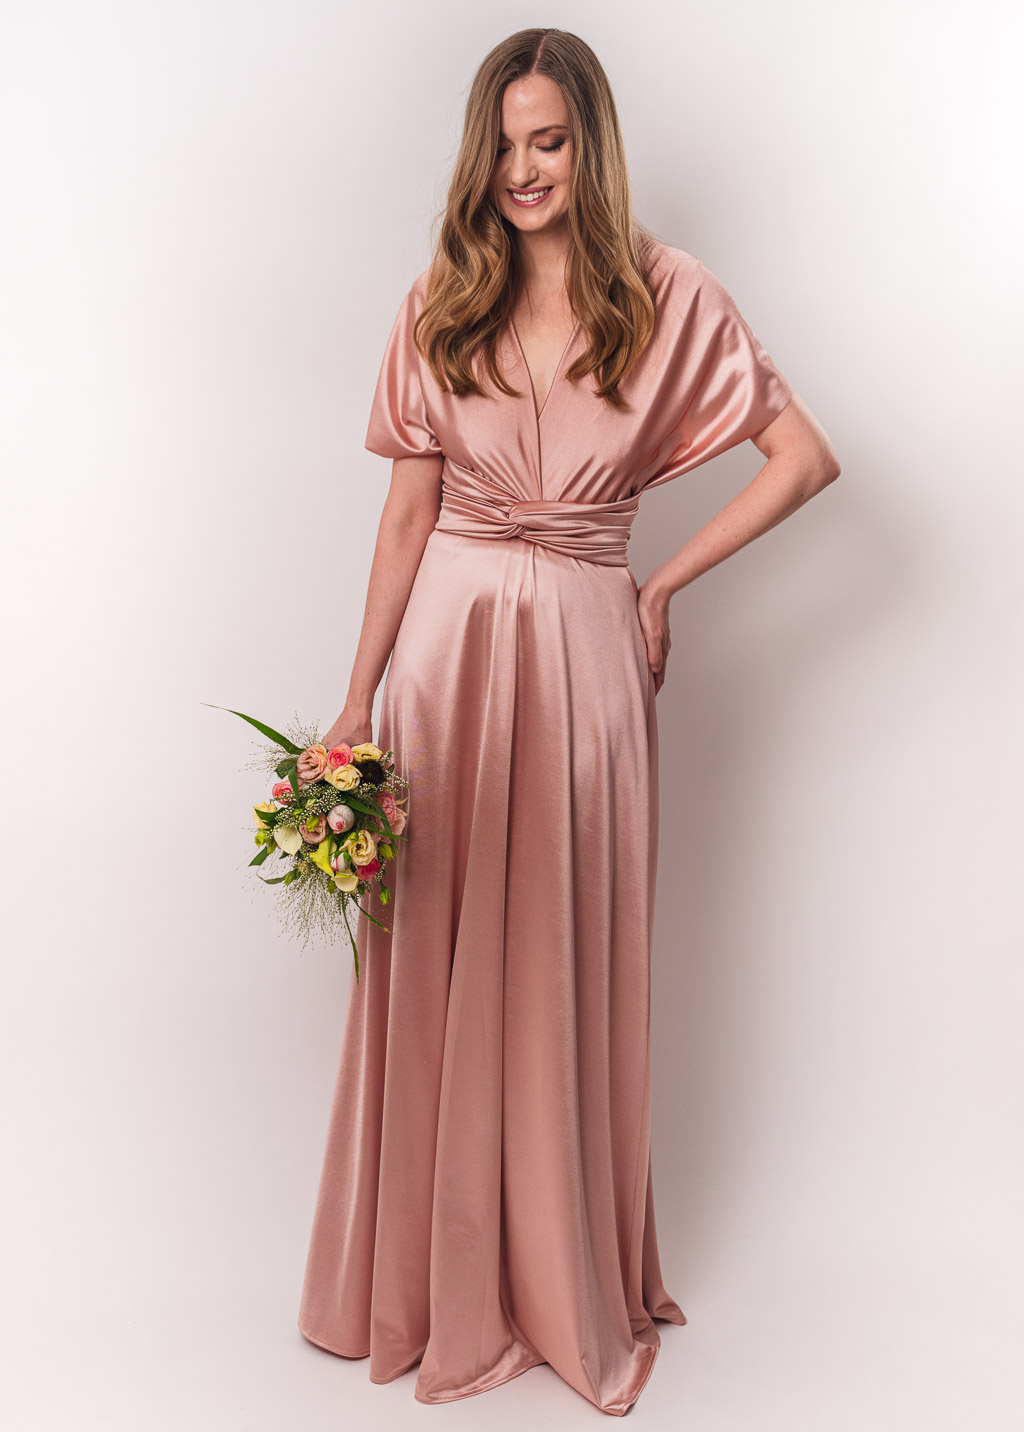 Blush pink luxury satin infinity dress or jumpsuit